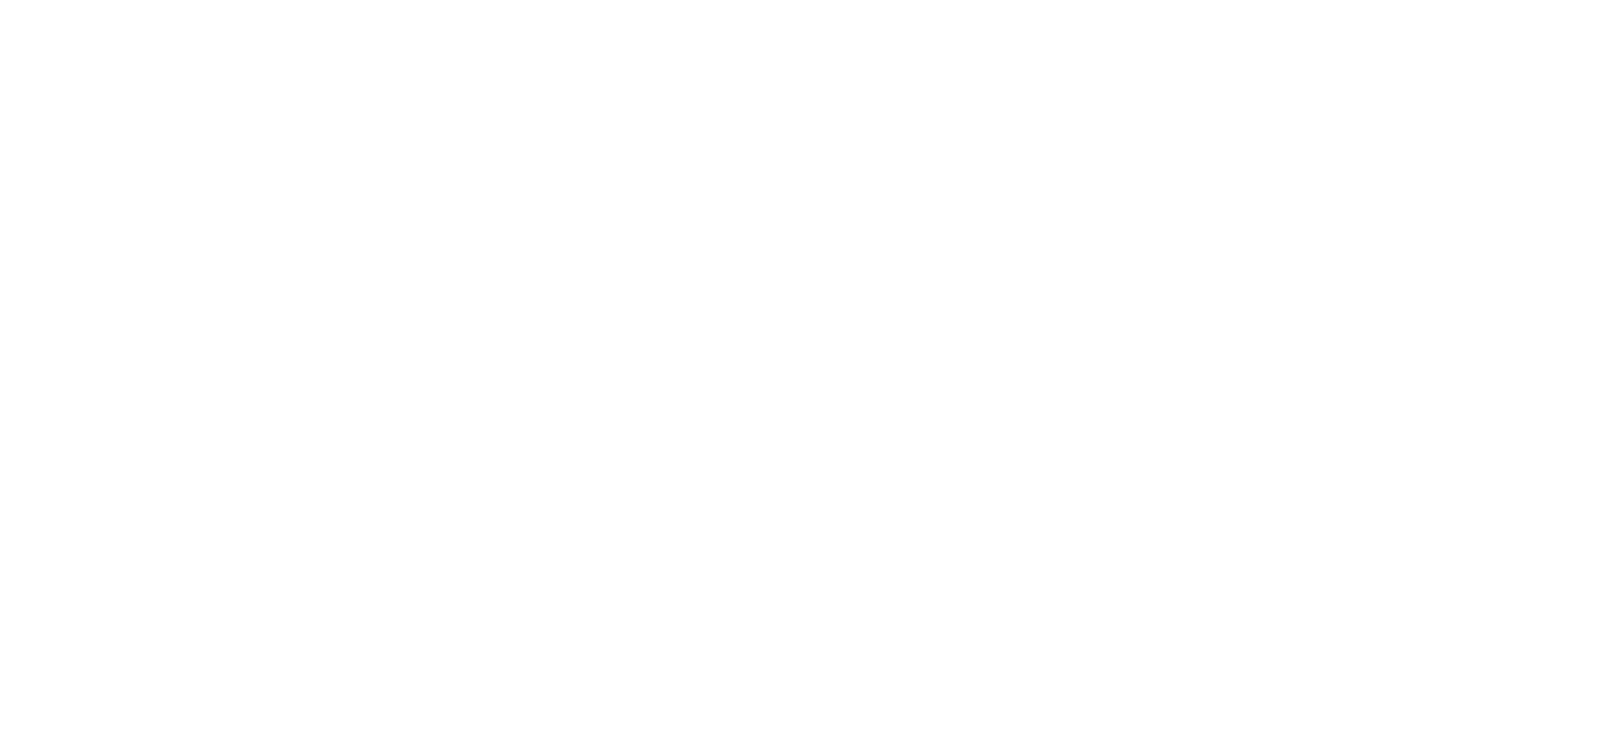 Nassau Marine Terminal